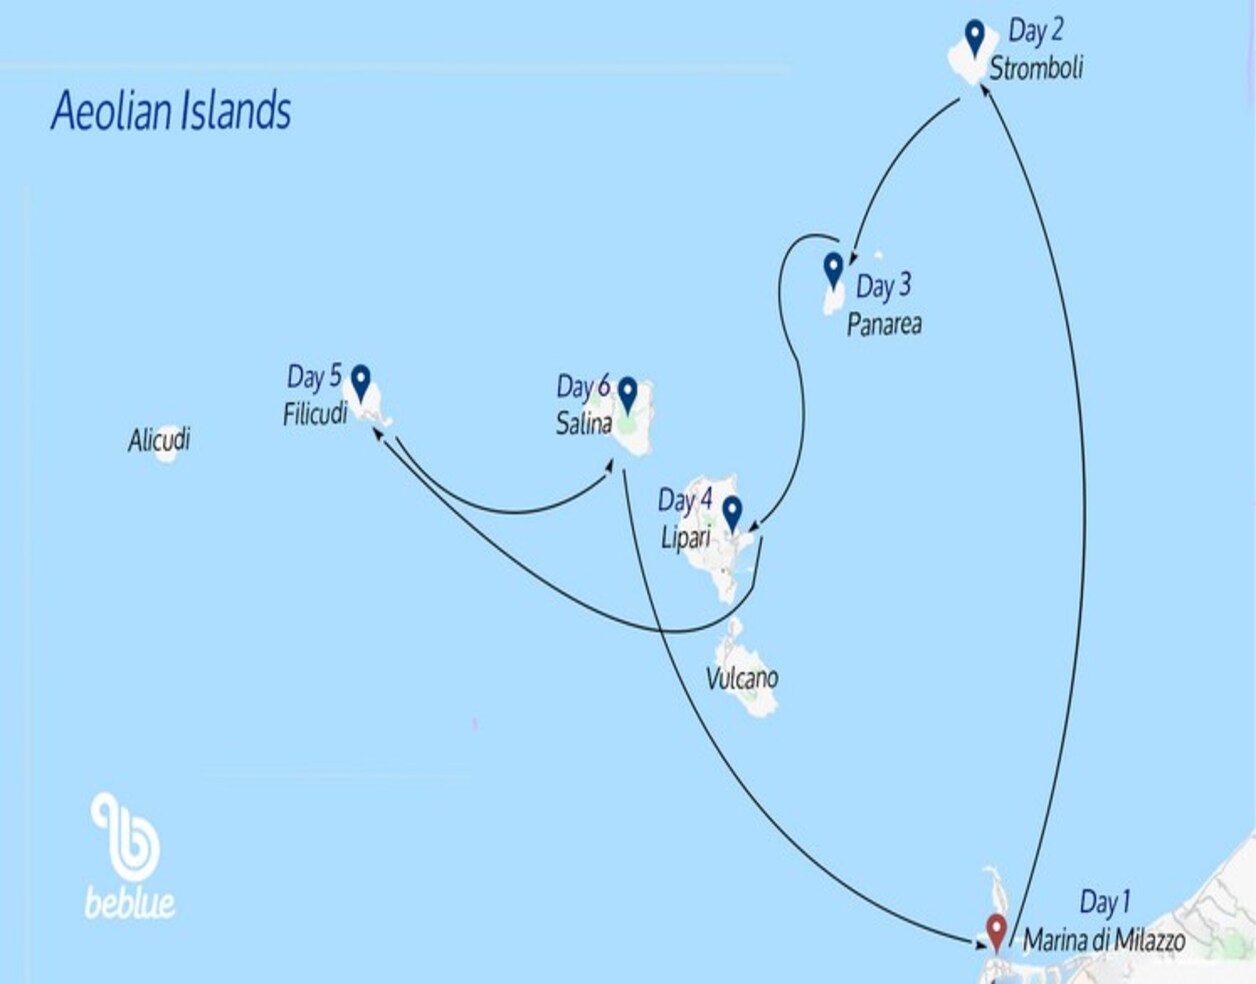 Aeolian islands - ID 385